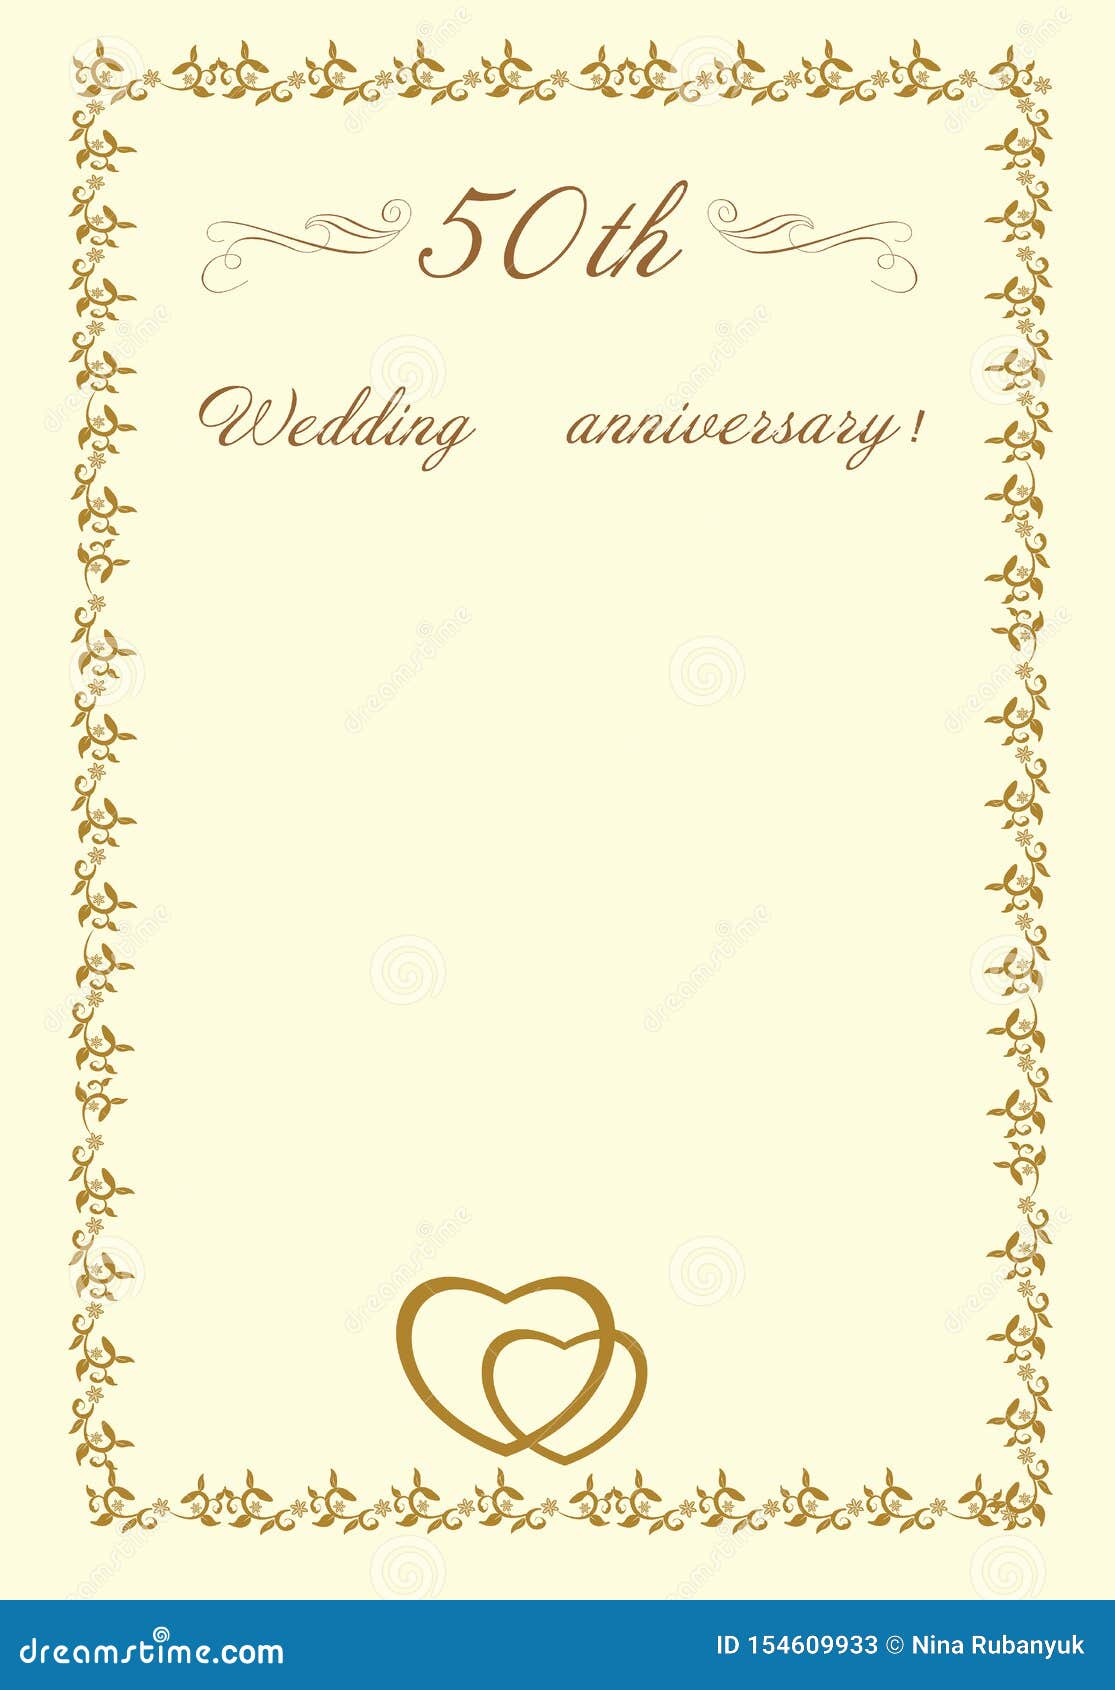 50th Wedding Anniversary Invitation Stock Illustration - Illustration of  pattern, vintage: 154609933